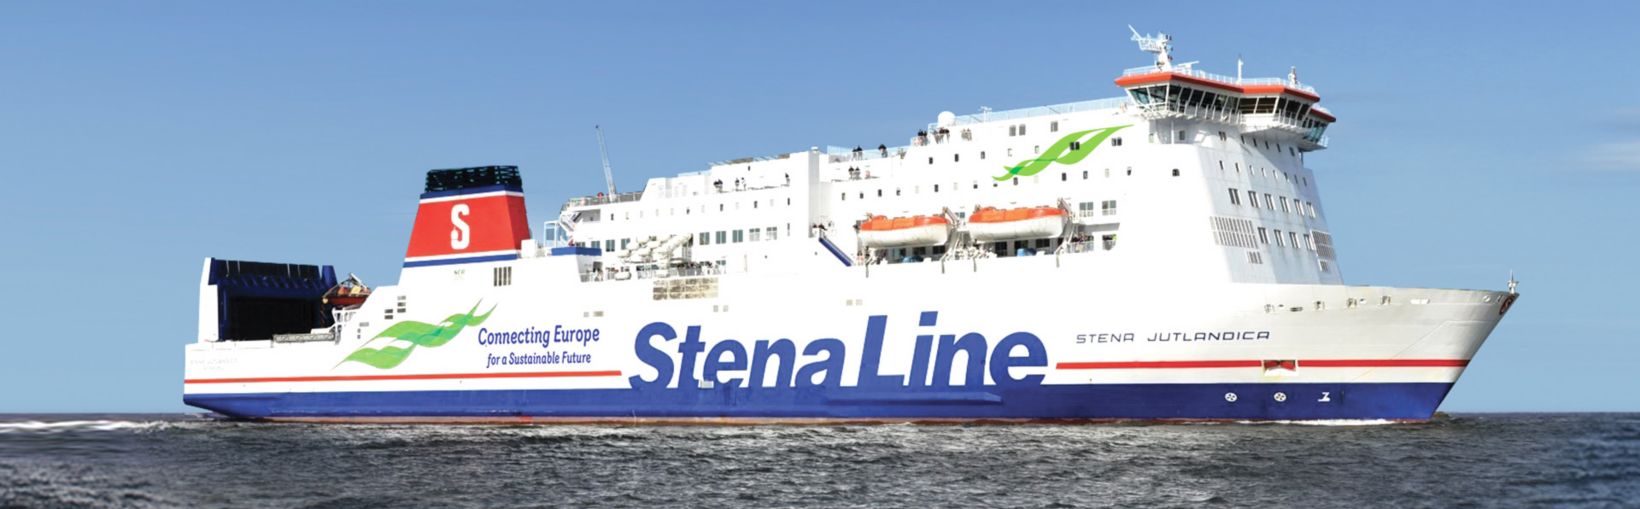 Stena Jutlandica ferry at sea